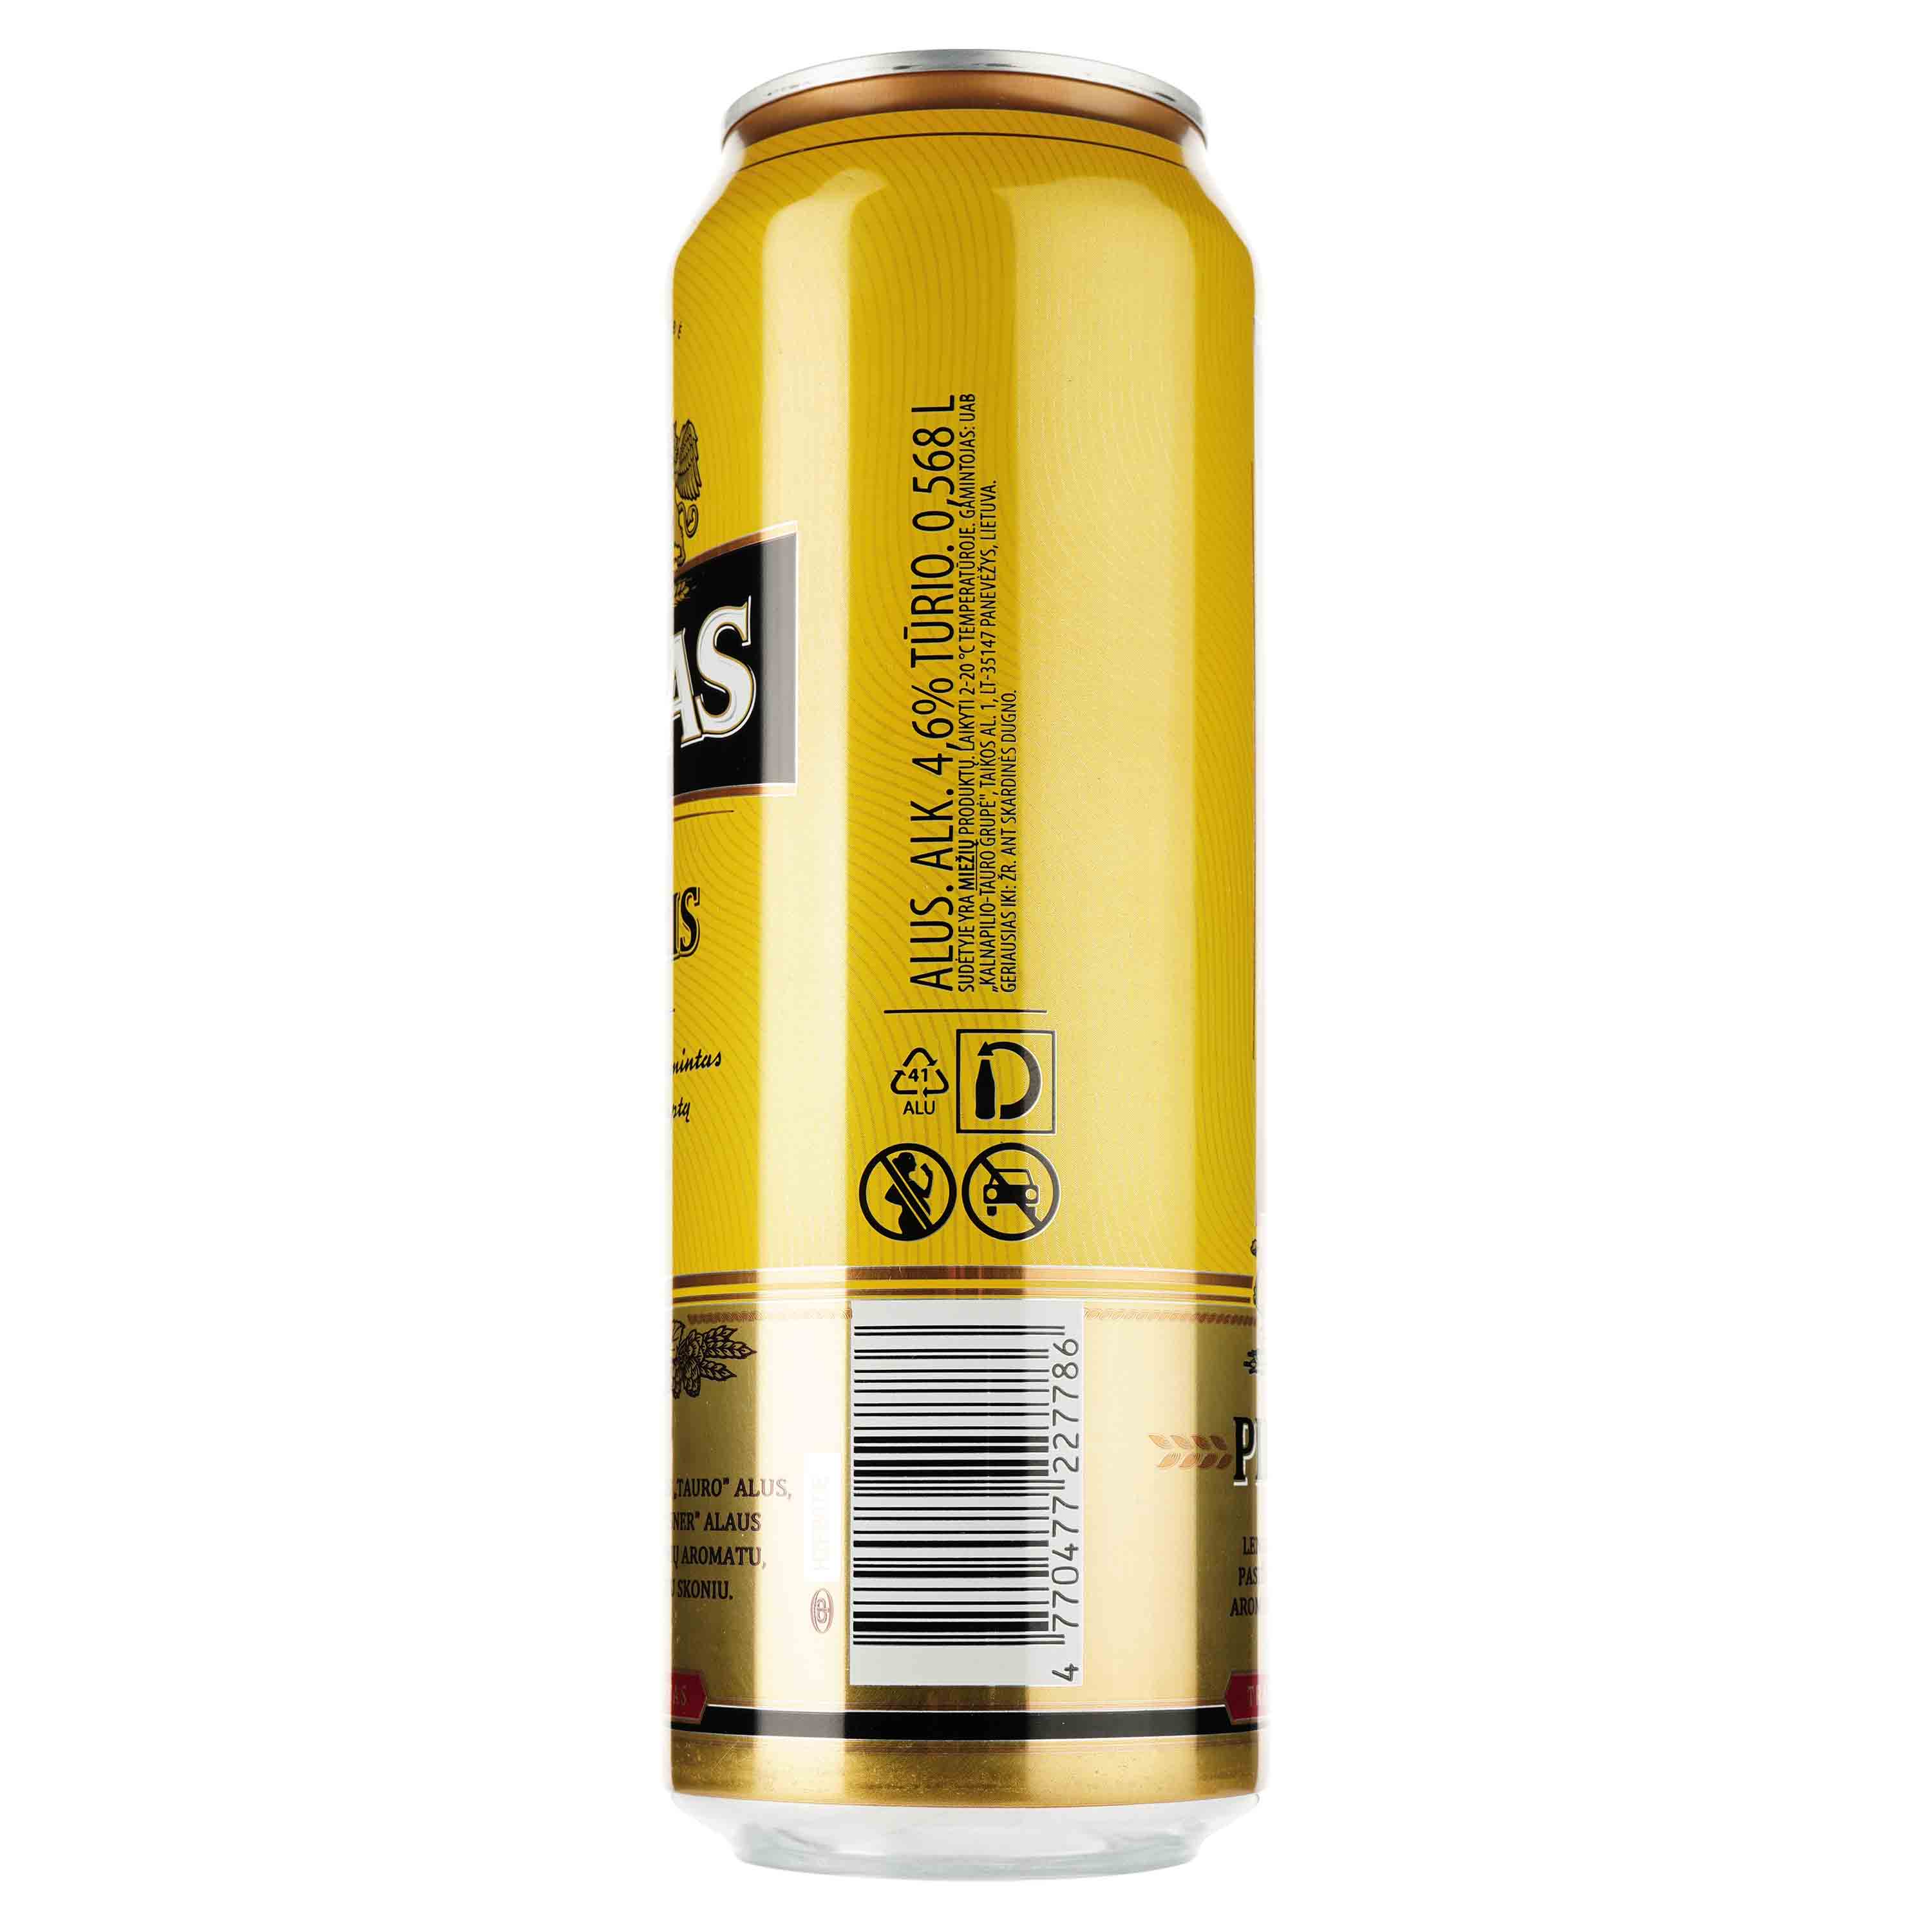 Пиво Tauras Pilsneris светлое, 4.6%, ж/б, 0.568 л - фото 2